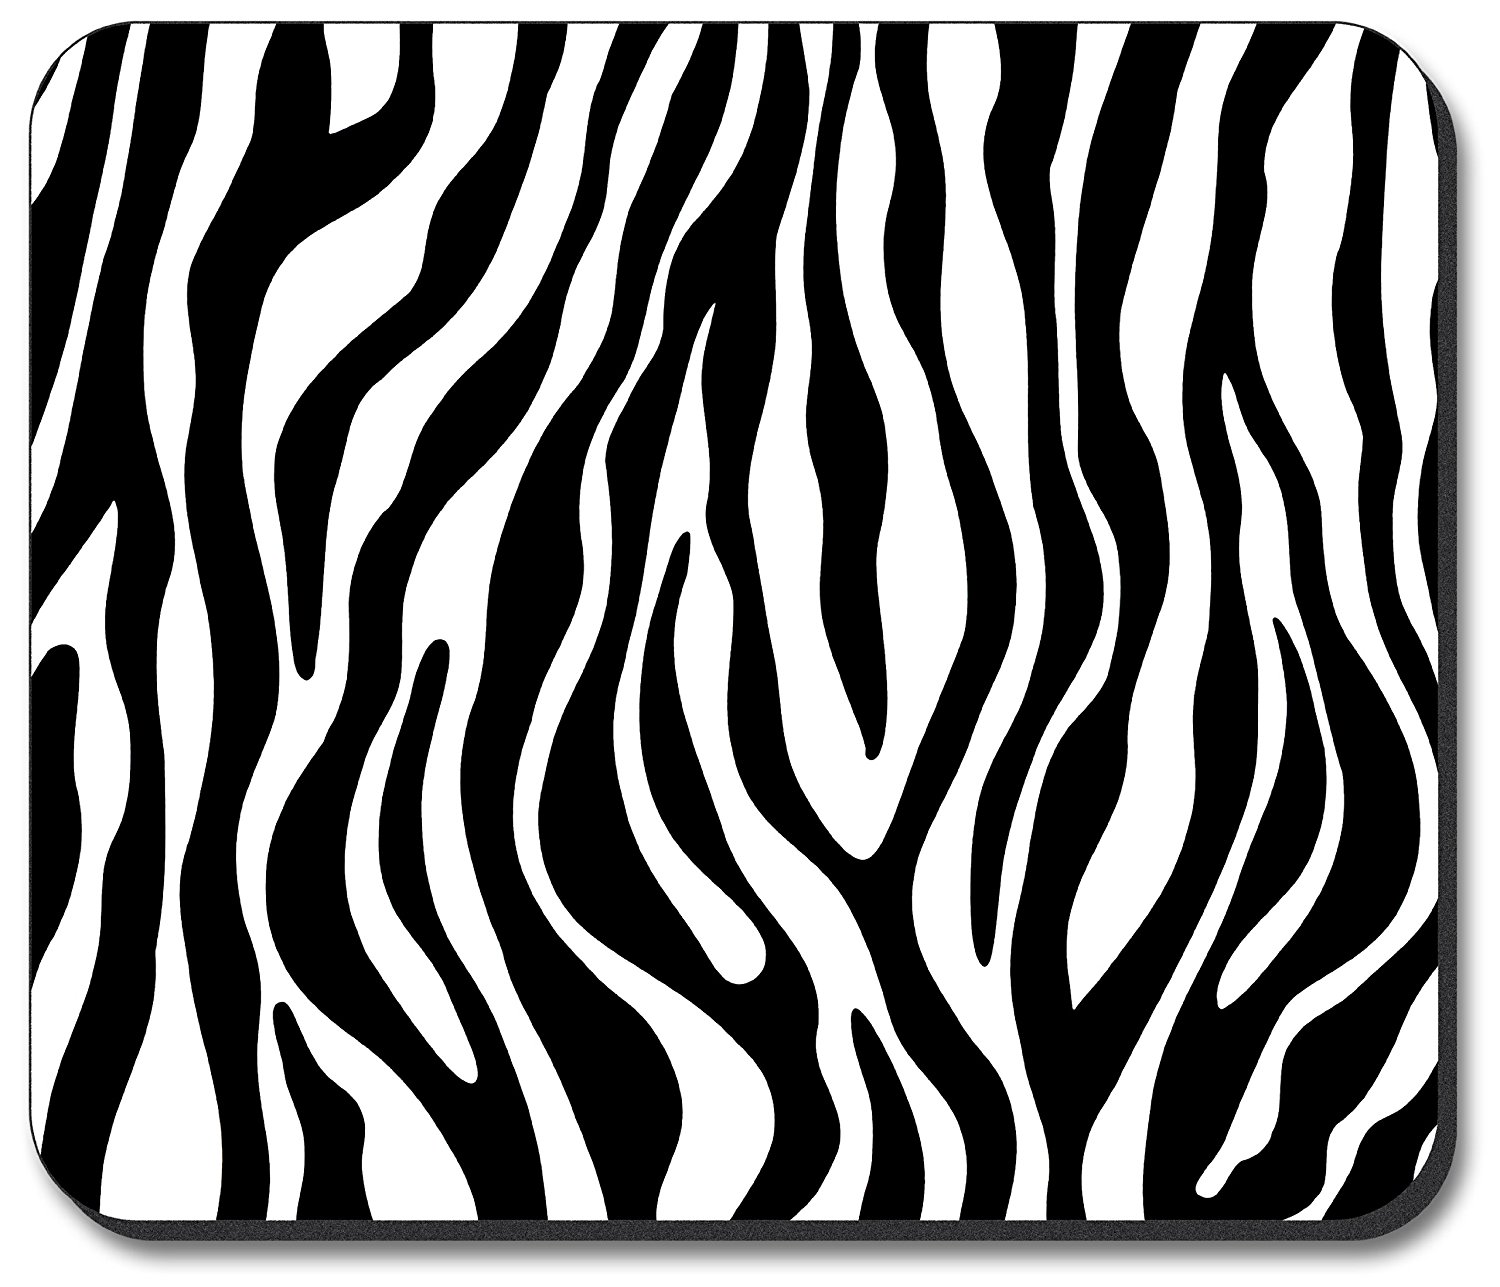 Zebra Line Drawing at GetDrawings Free download